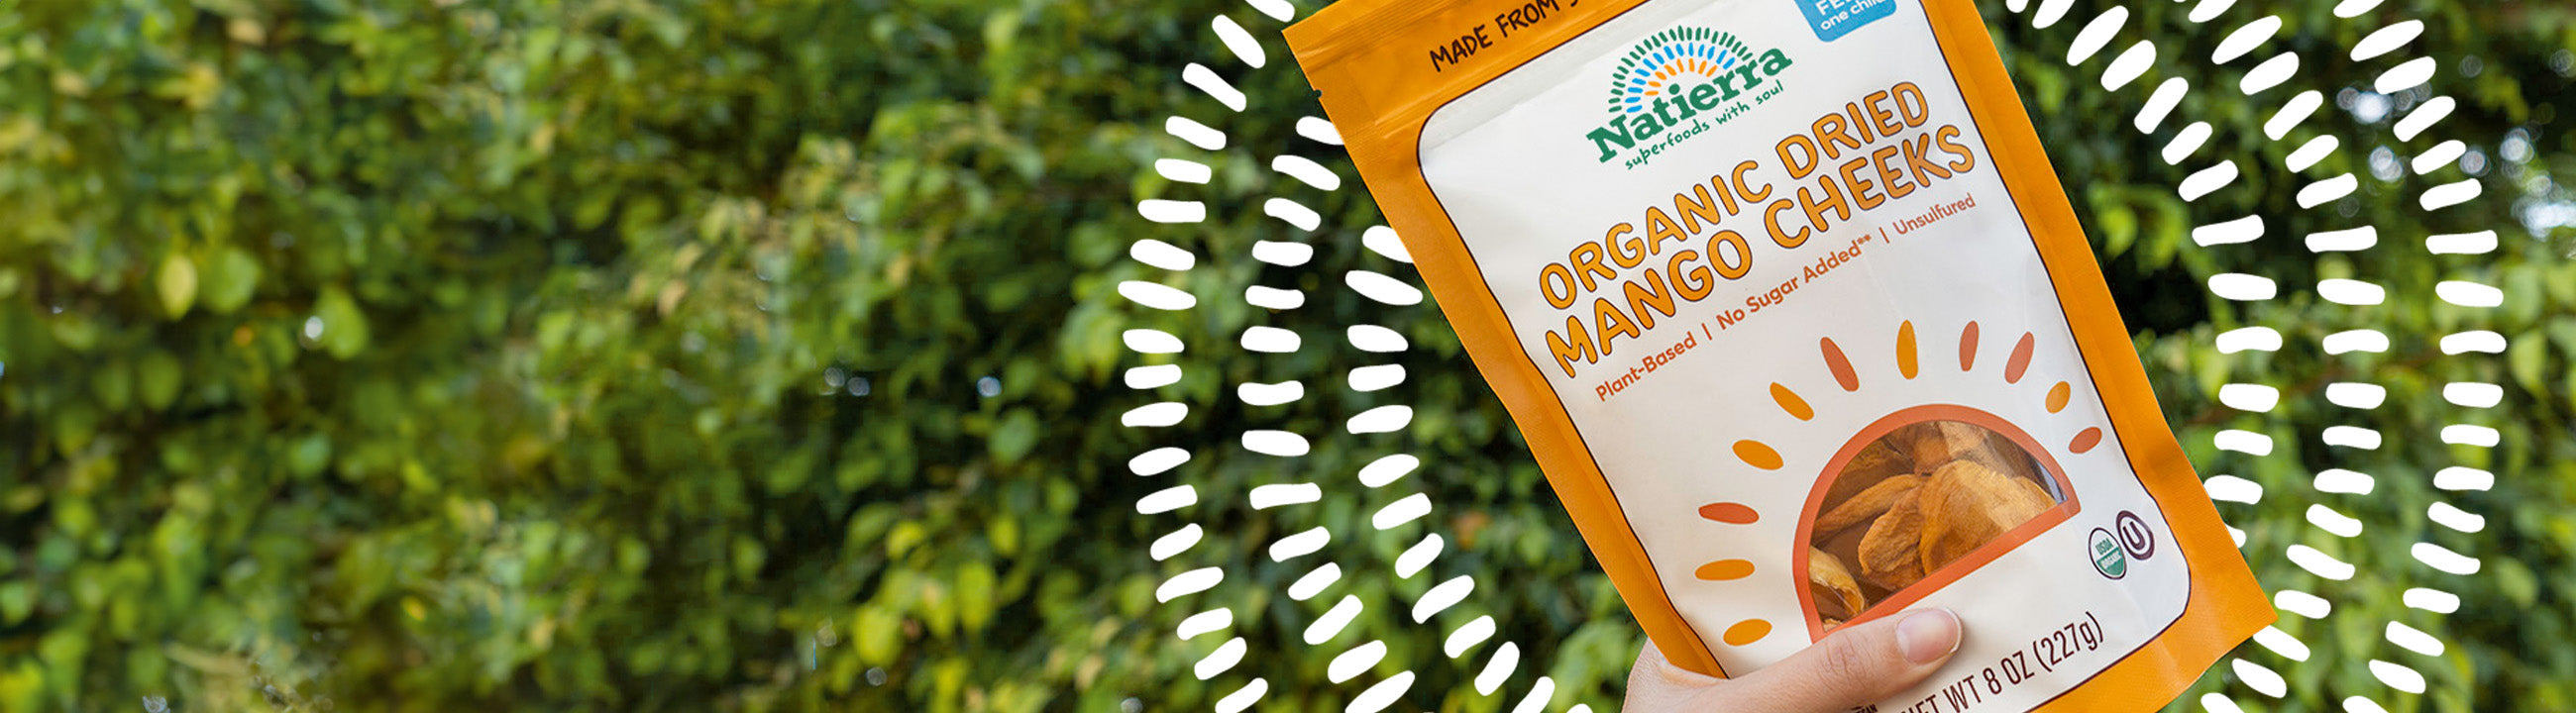 Organic dried mango cheeks